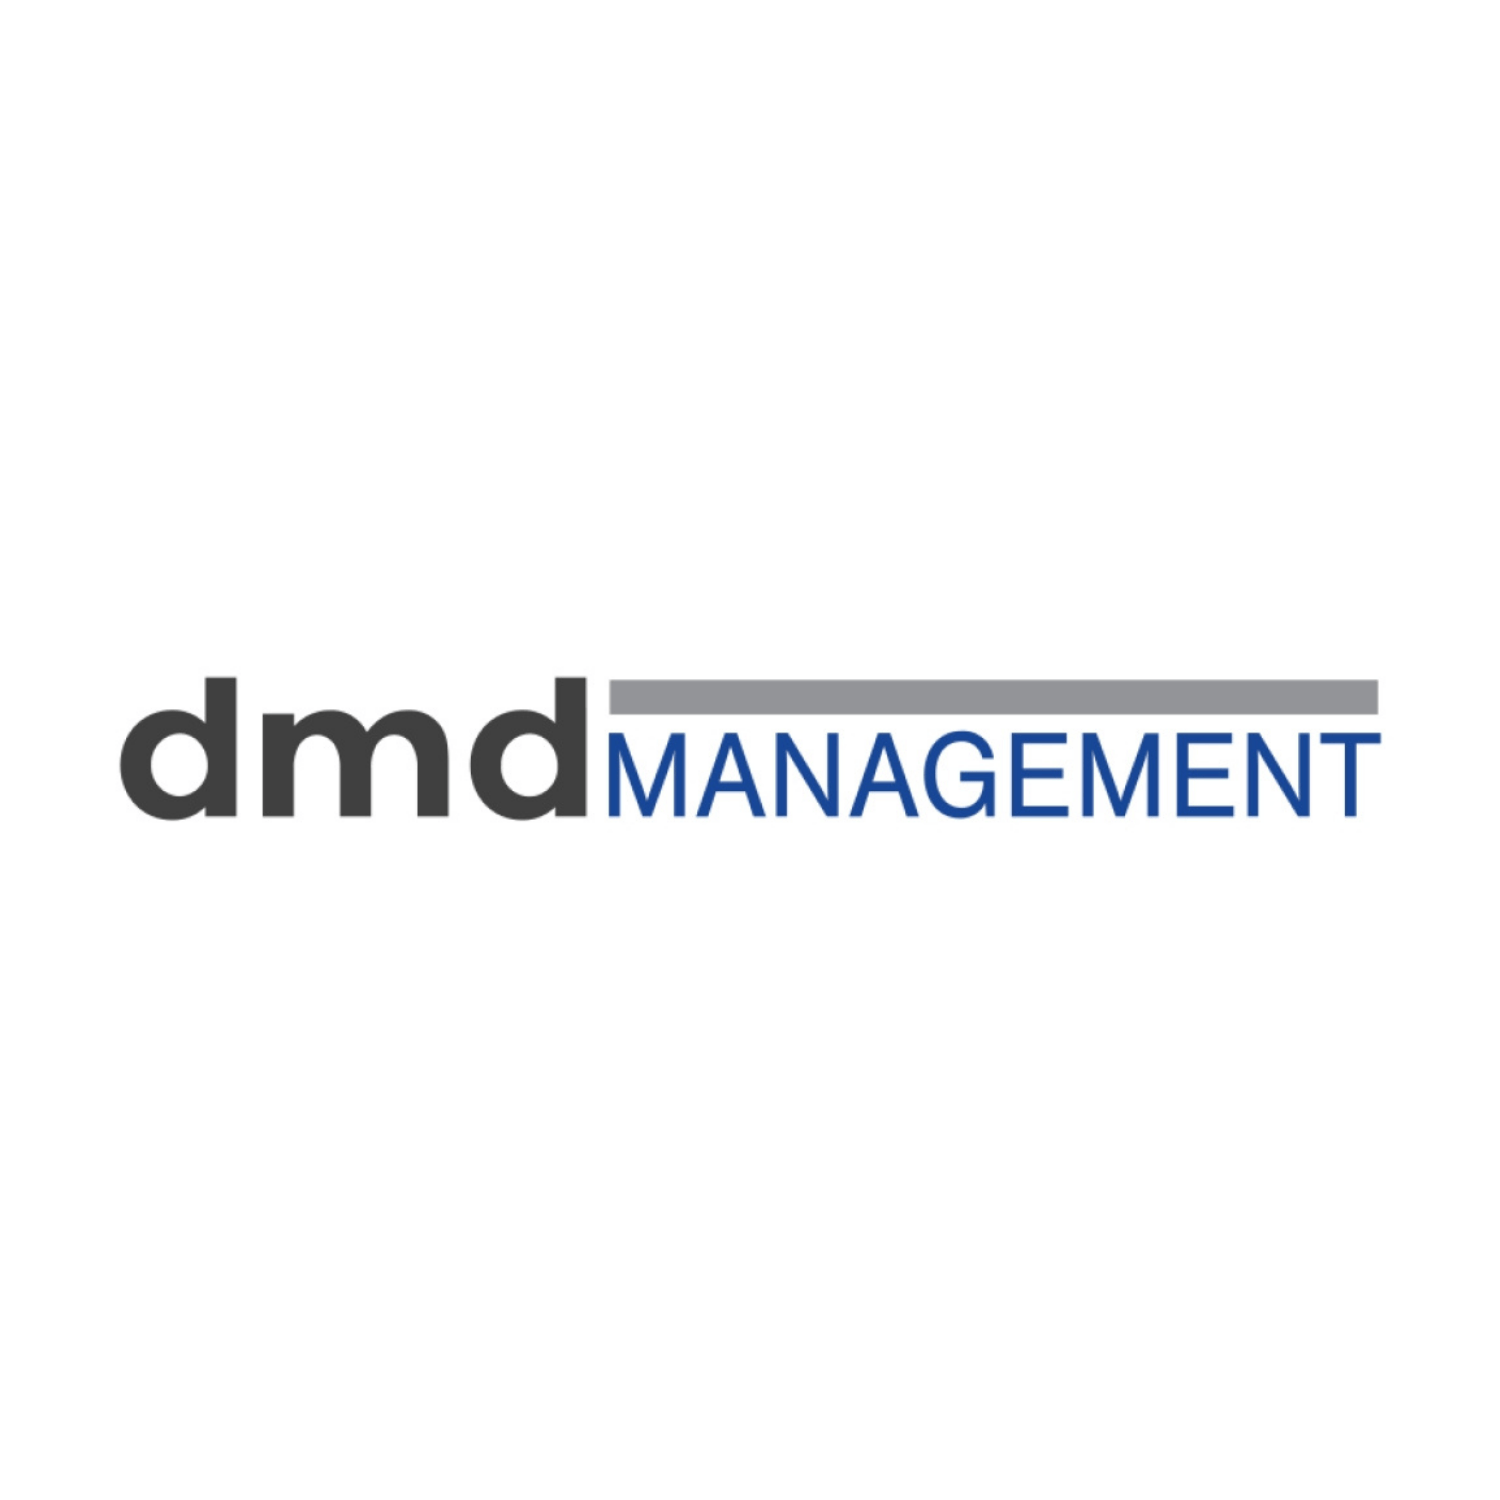 DMD management logo no background